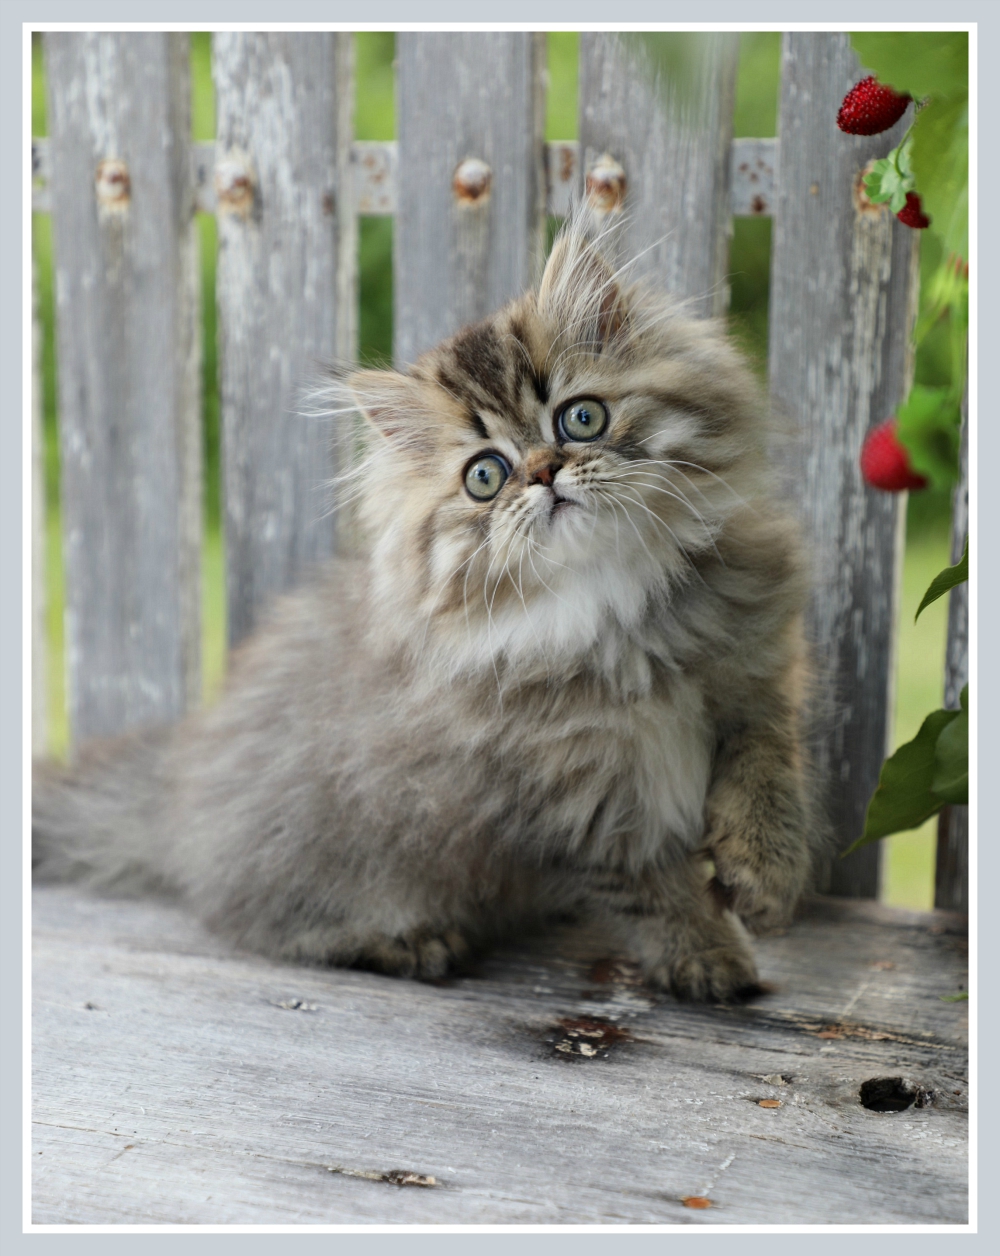 Tabby Persian Kitten